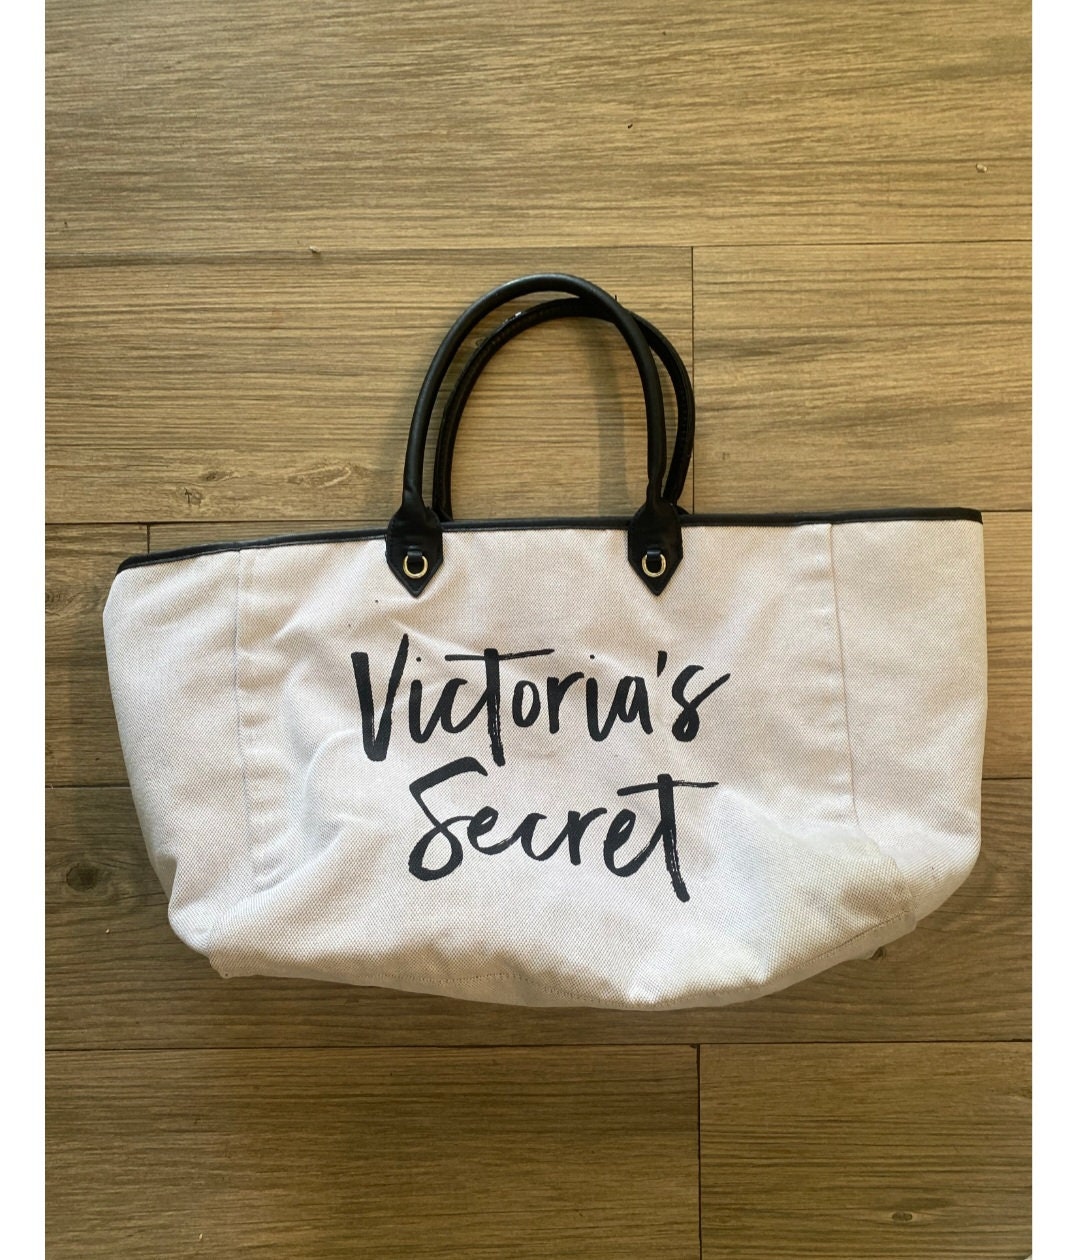 Victoria's secret Totes